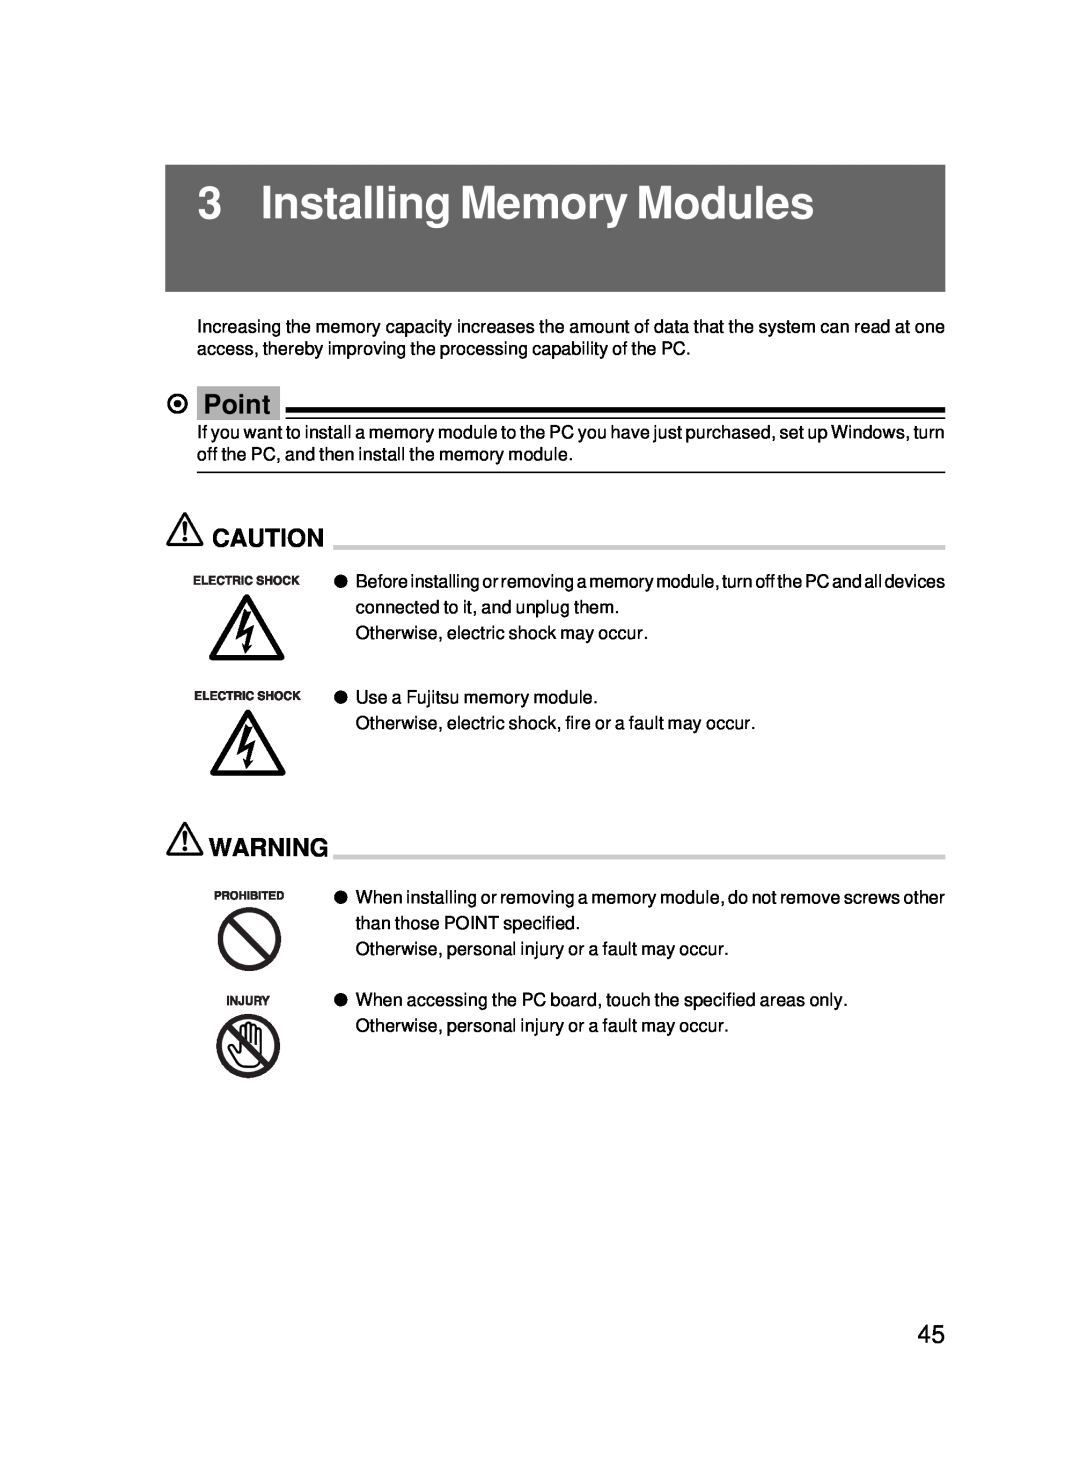 Fujitsu 5000 user manual Installing Memory Modules, Point 